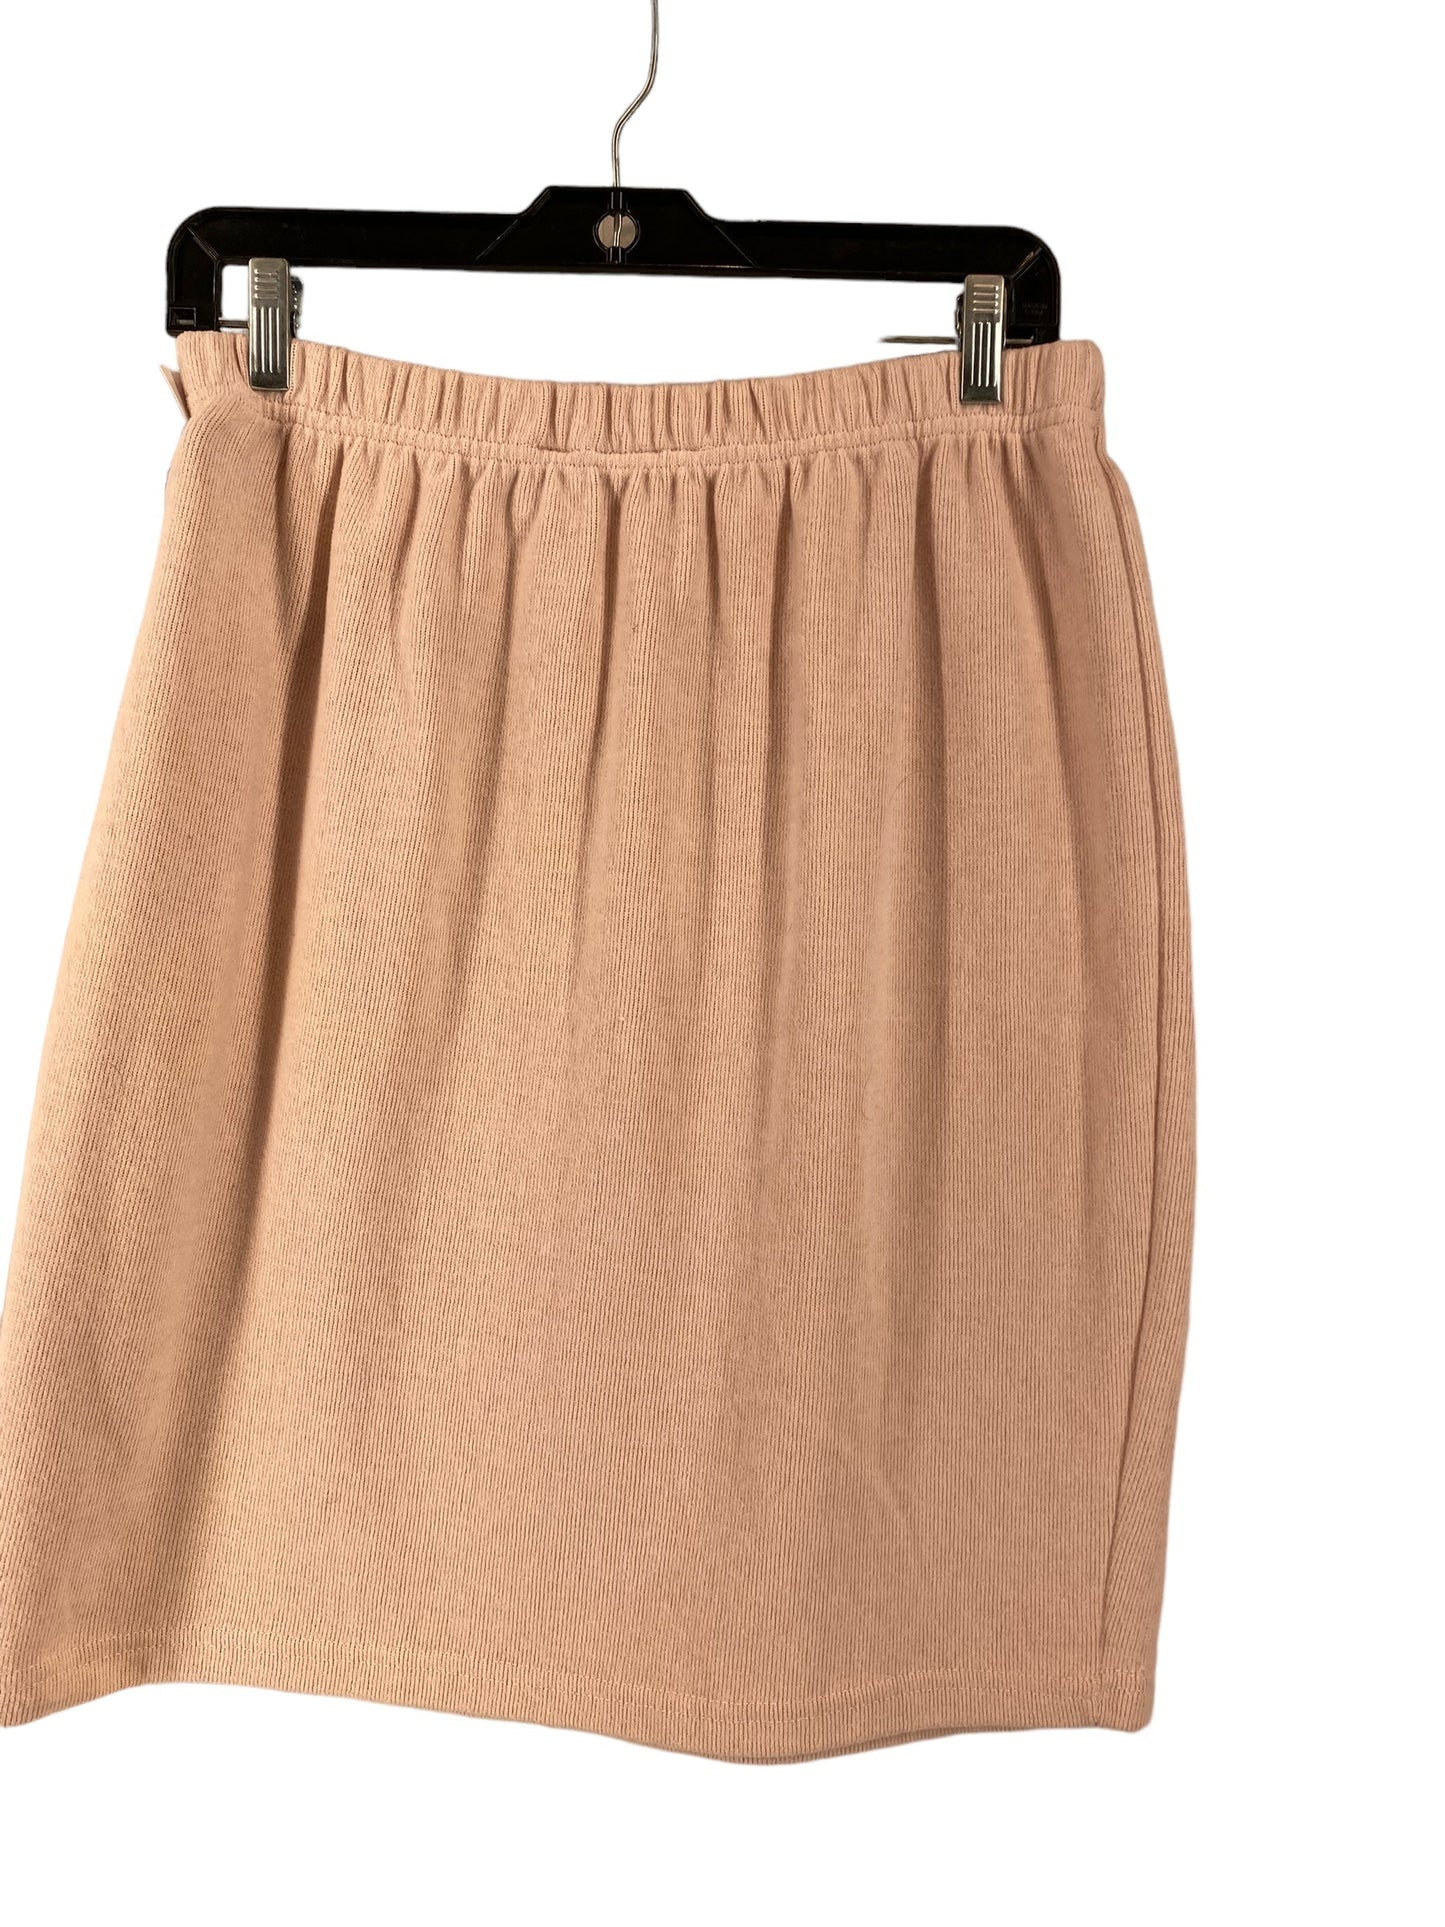 Skirt Midi By Chaus  Size: L